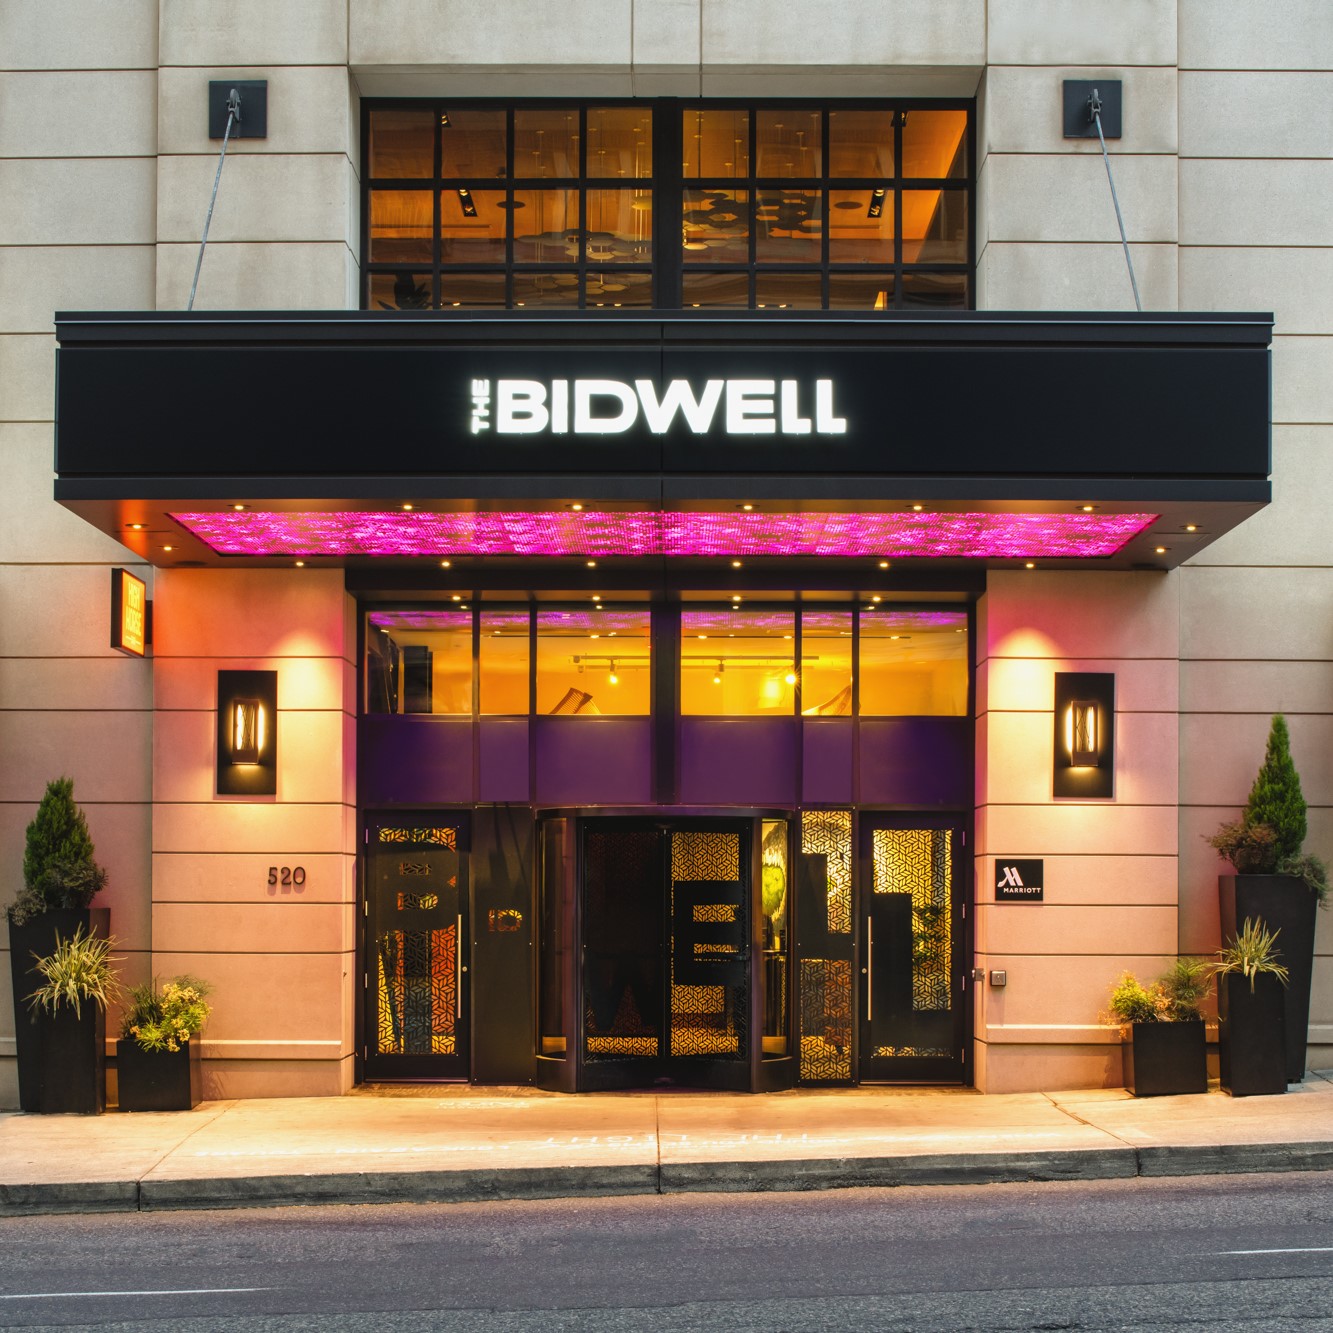 The Bidwell Hotel